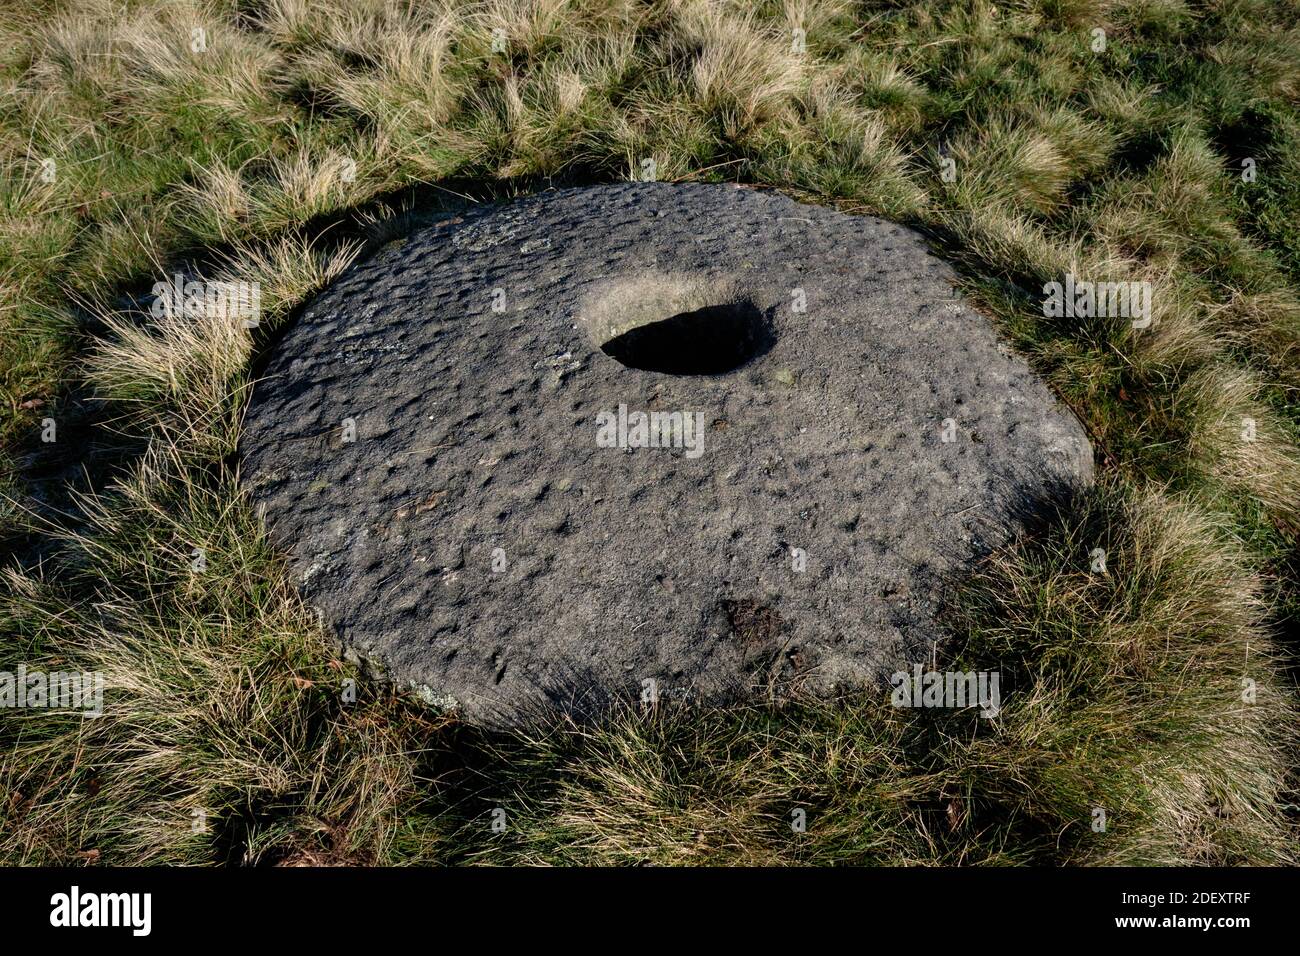 Abandoned millstone lying on rough grass Stock Photo